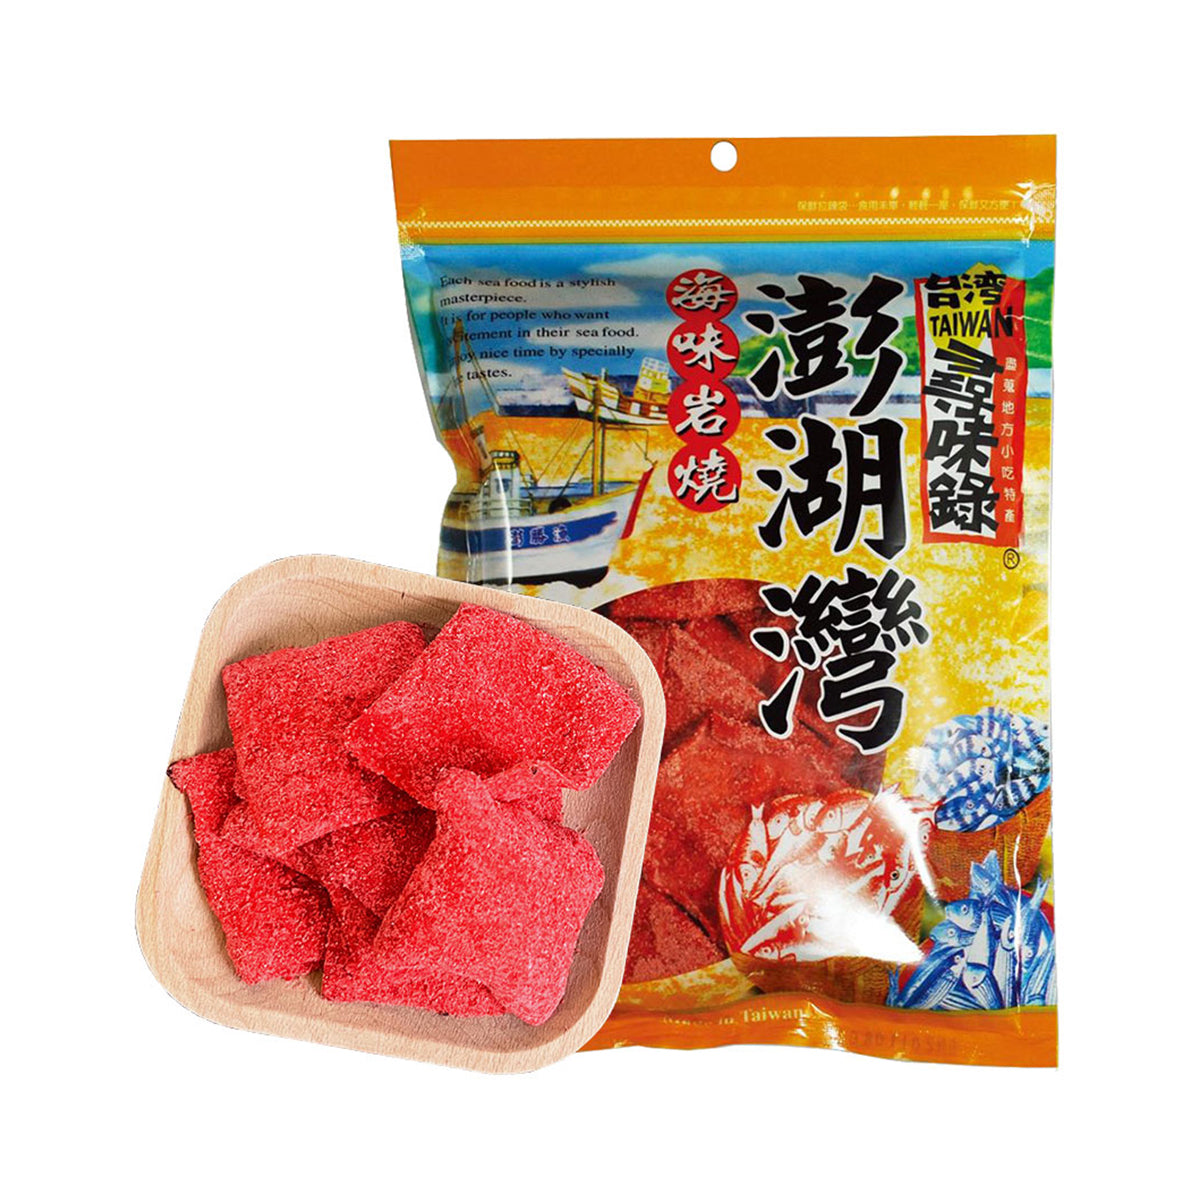 【TAIWAN SYUN WEI LU FOOD】 BBQ Sauce Fish Snack 110g